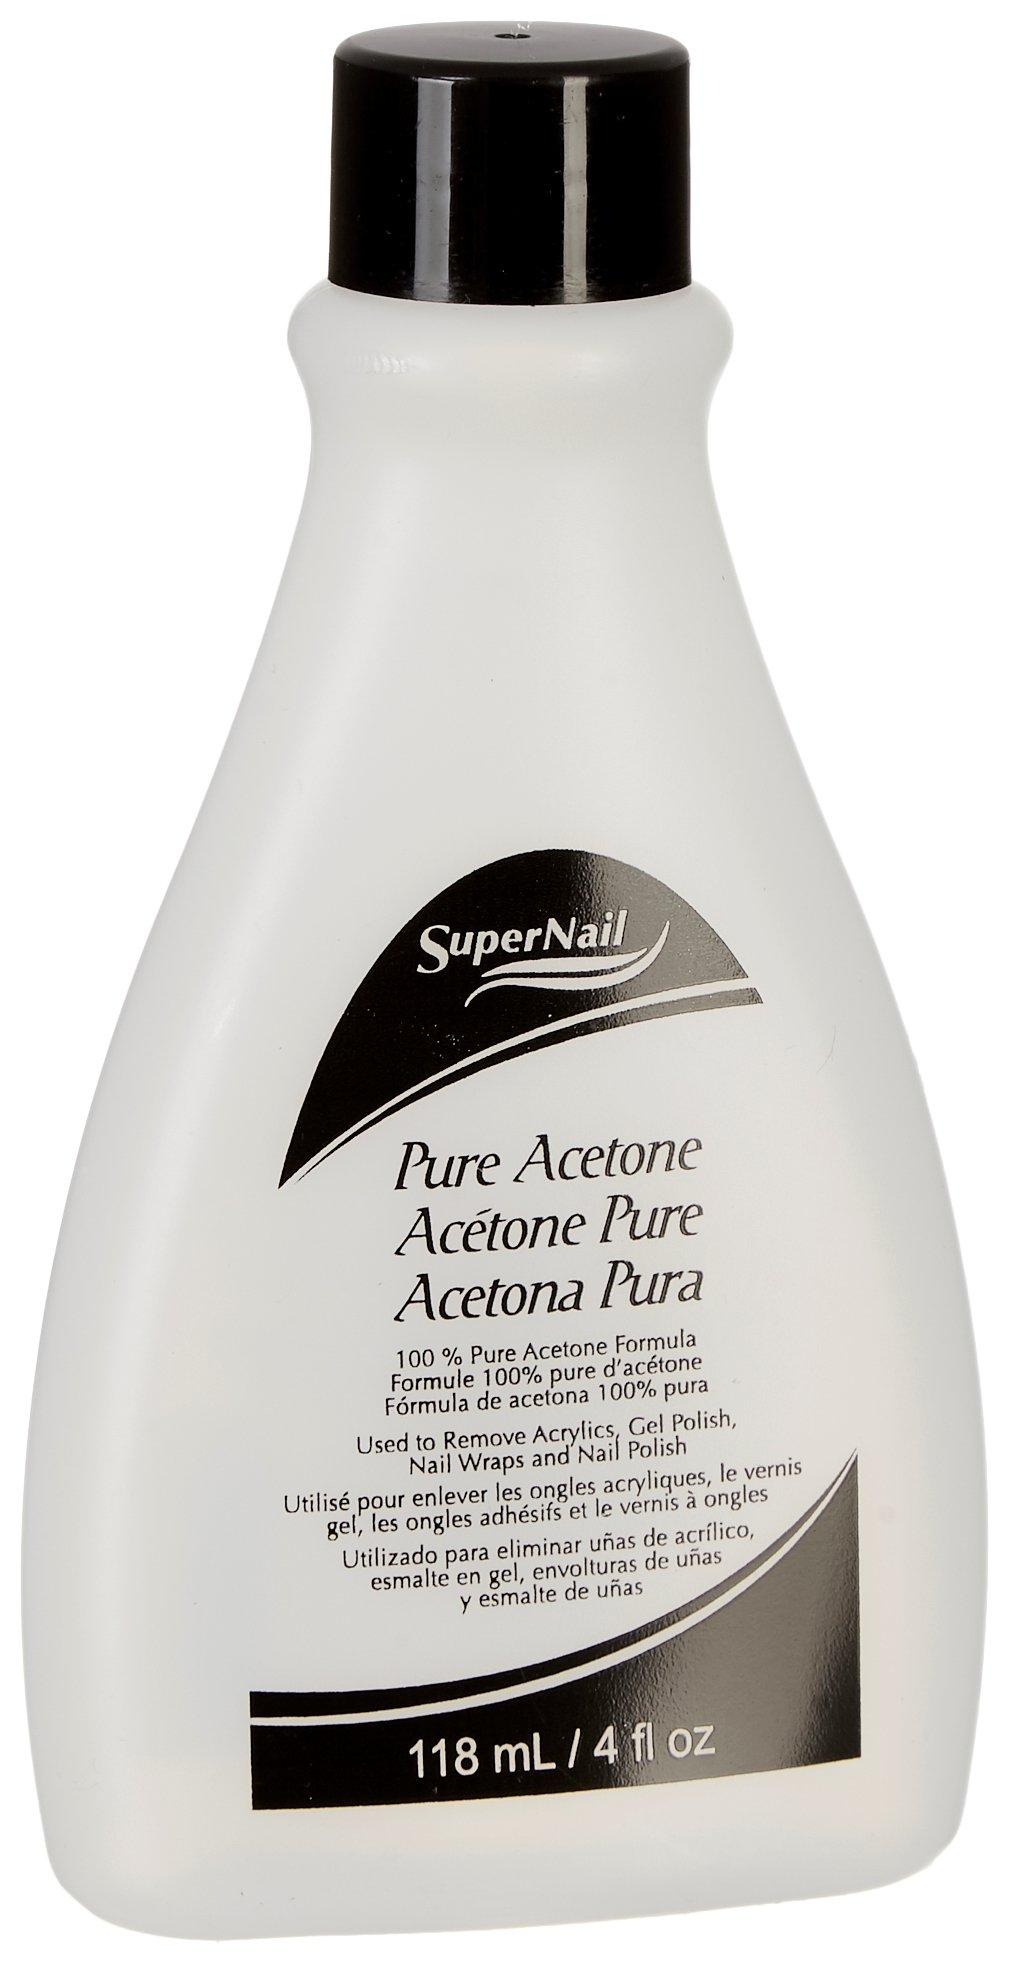 4 oz Pure Acetone Nail Polish Remover